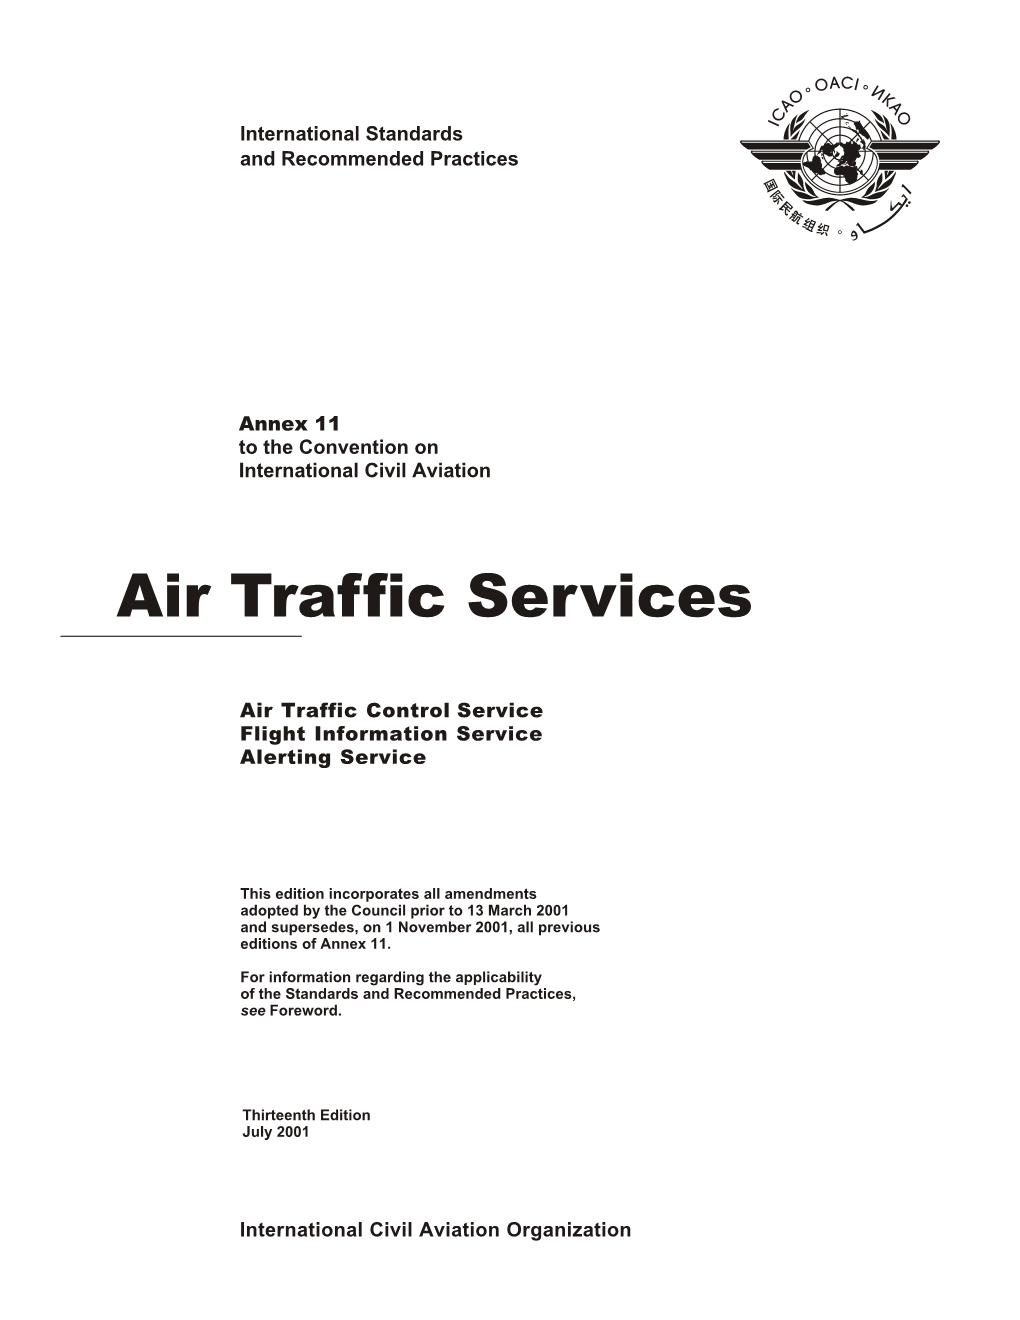 ICAO Annex 11 – Air Traffic Services